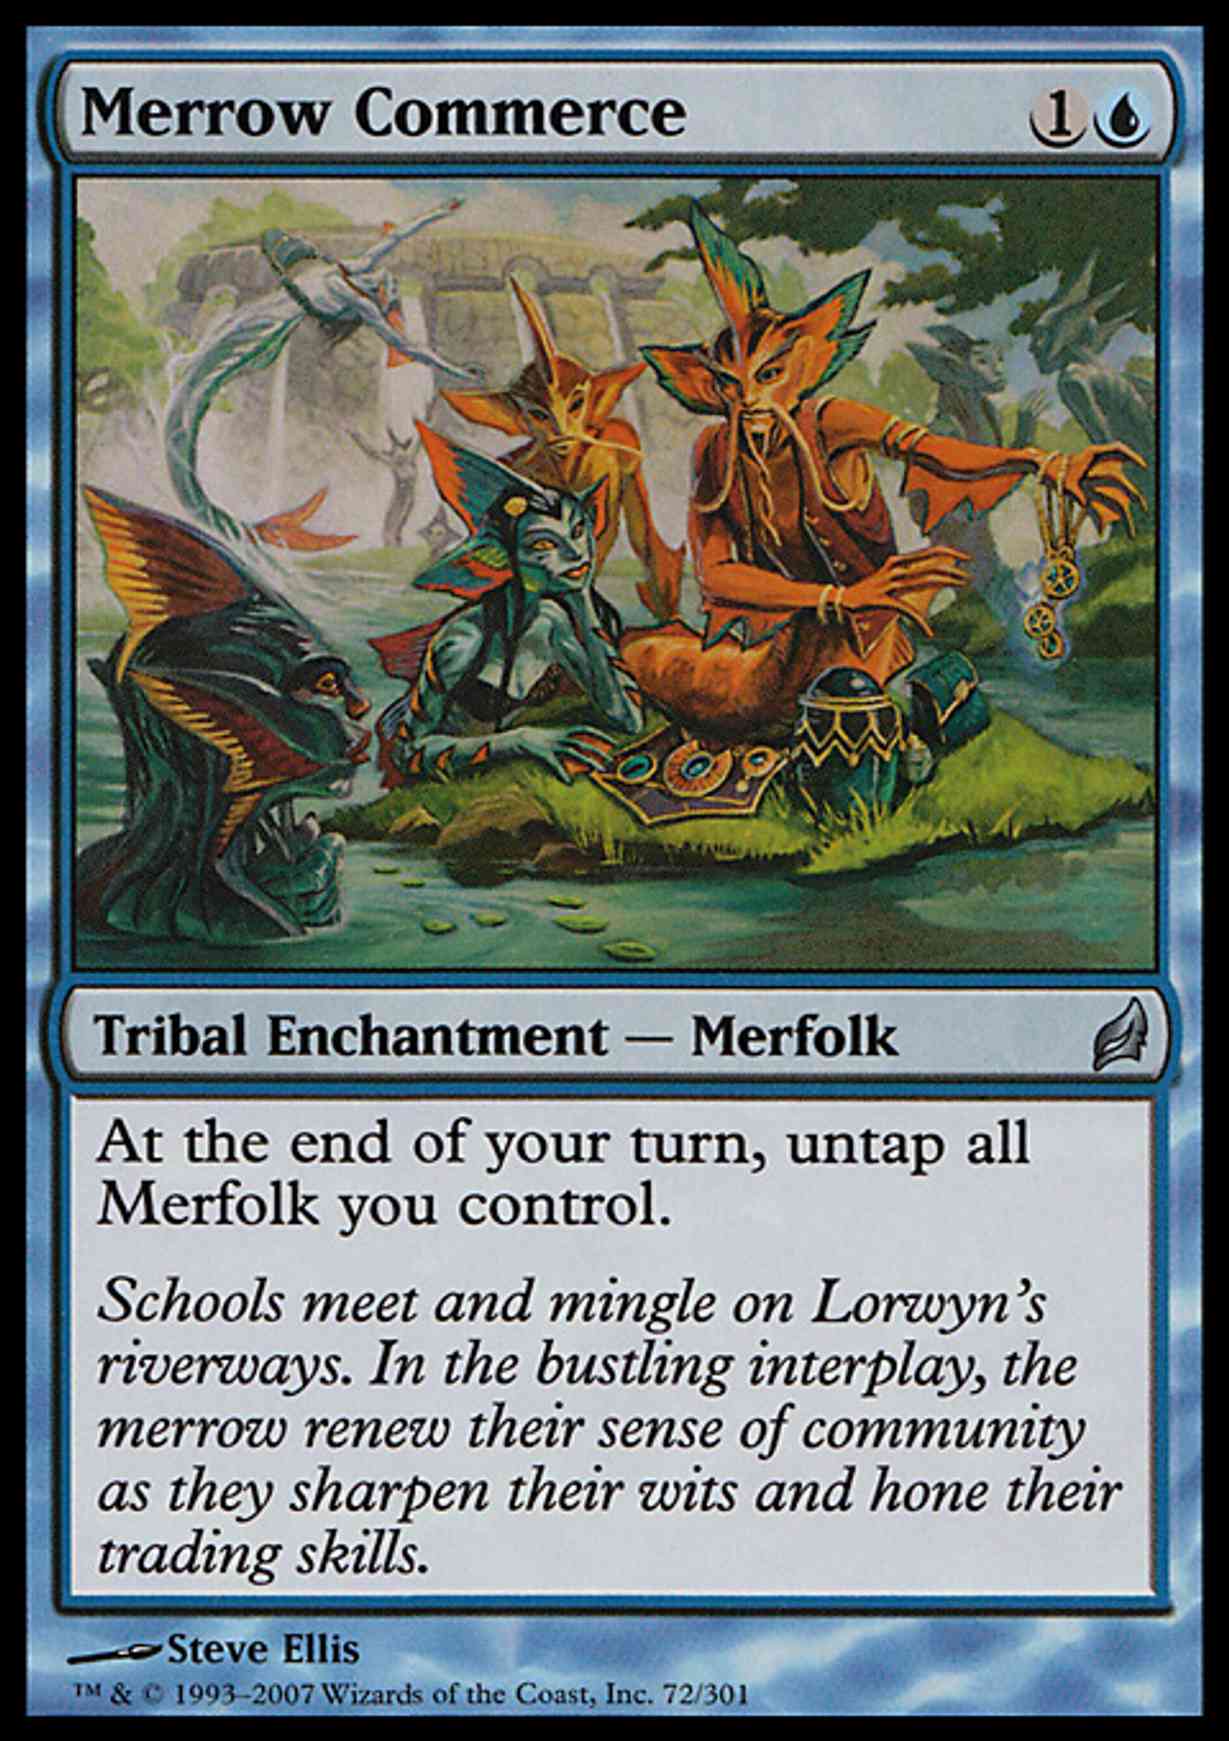 Merrow Commerce magic card front